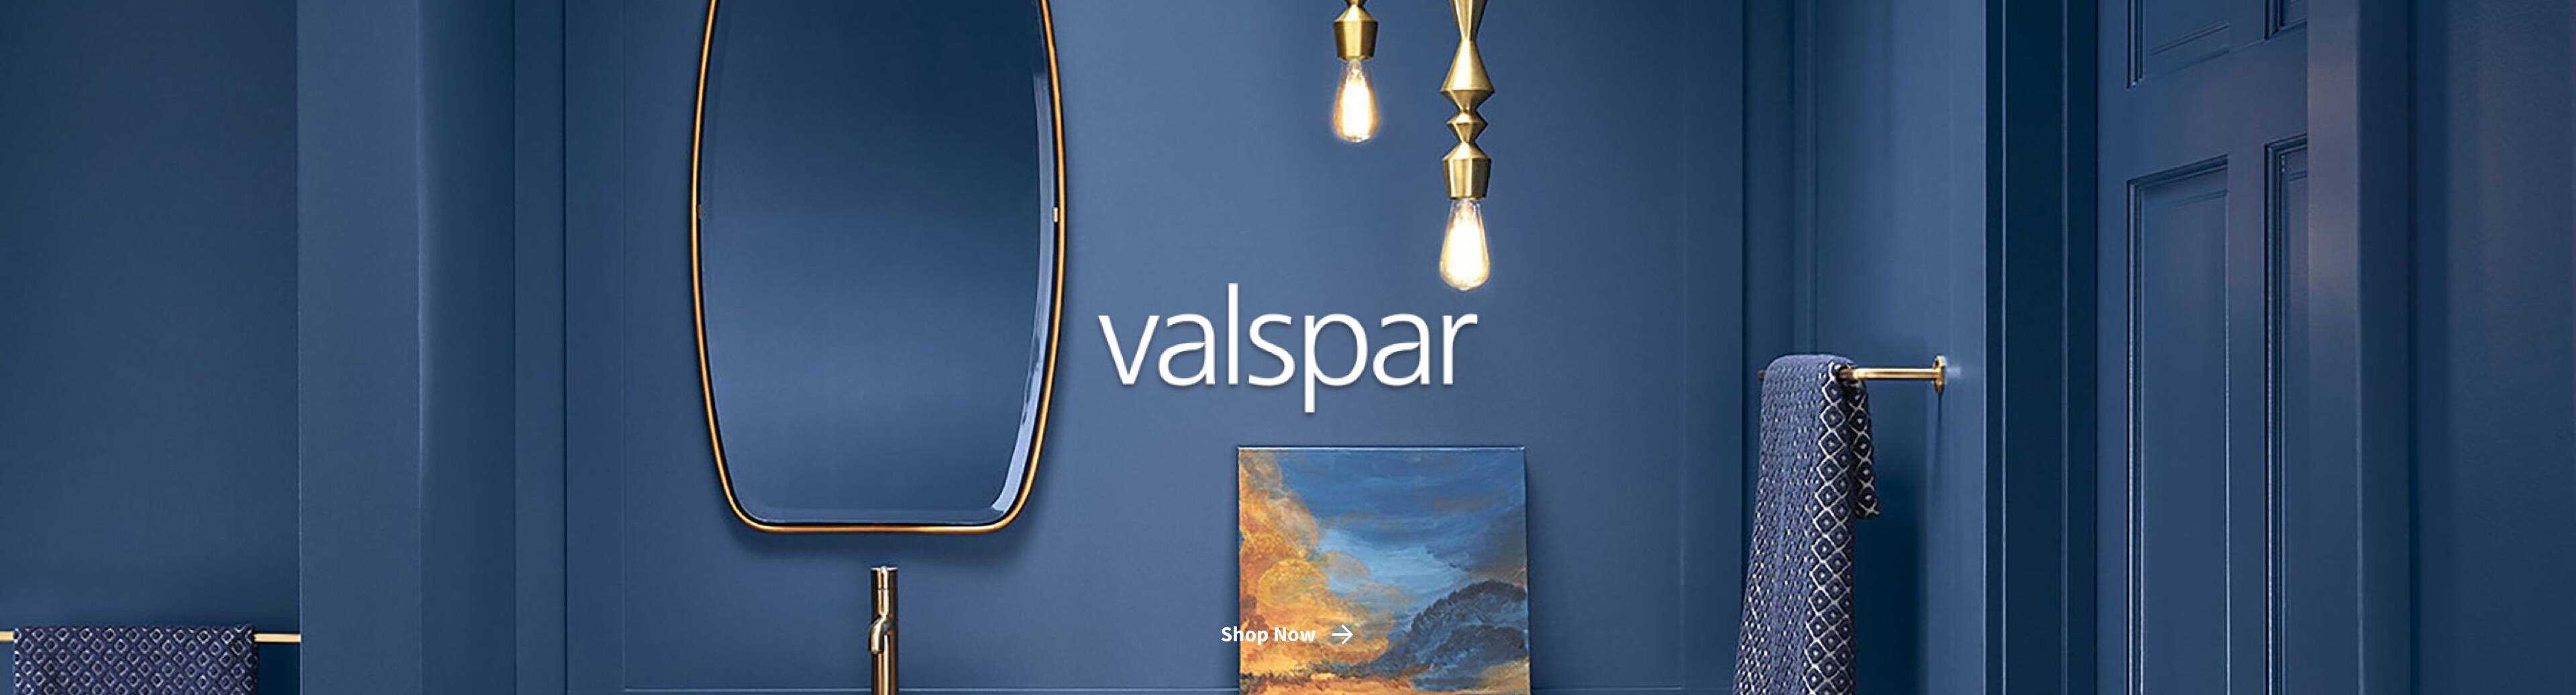 Blue Valspar paint on wall with logo